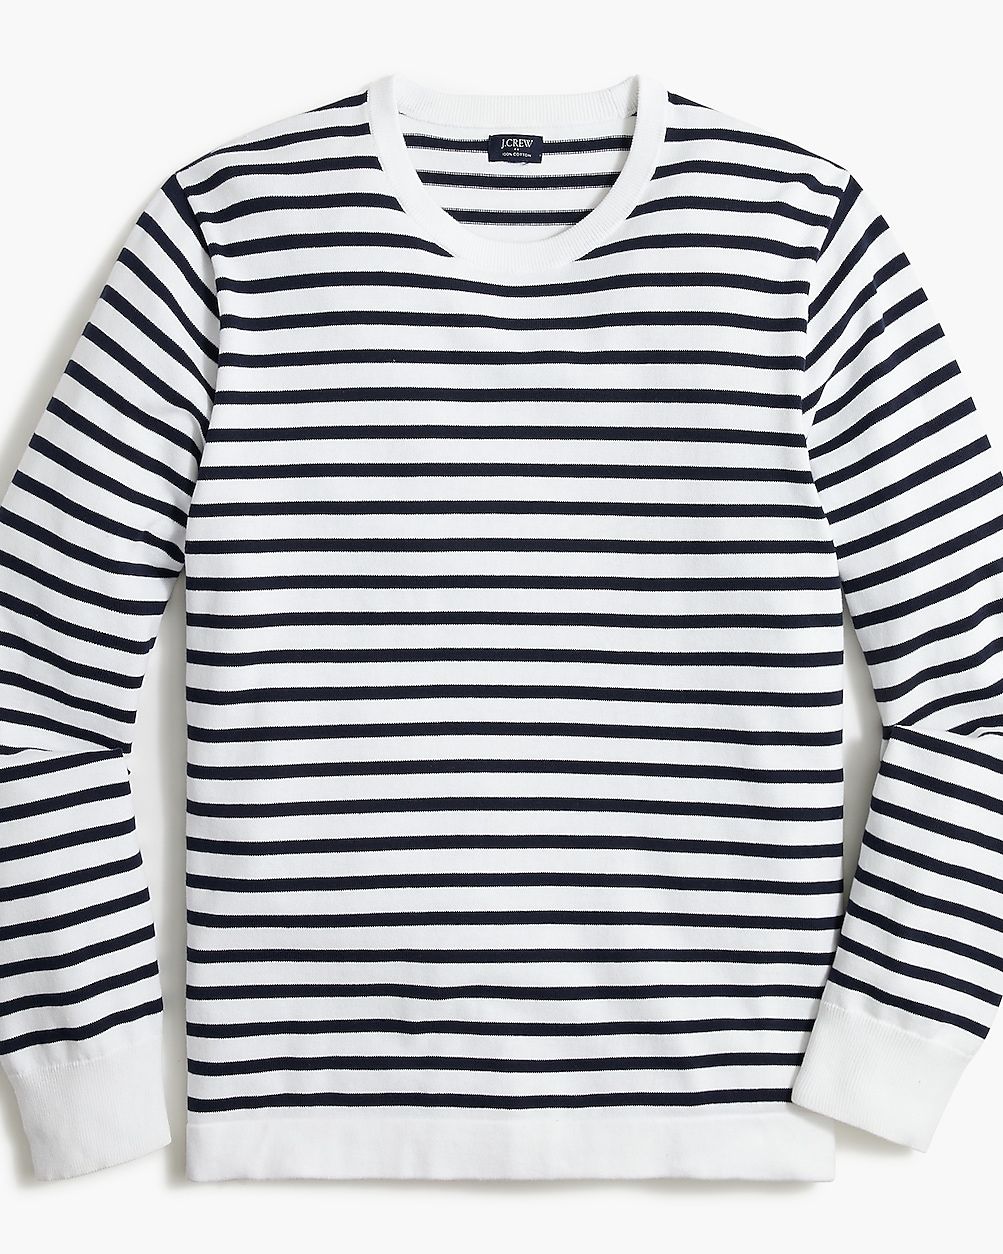 Long-sleeve striped cotton crewneck sweater | J.Crew Factory